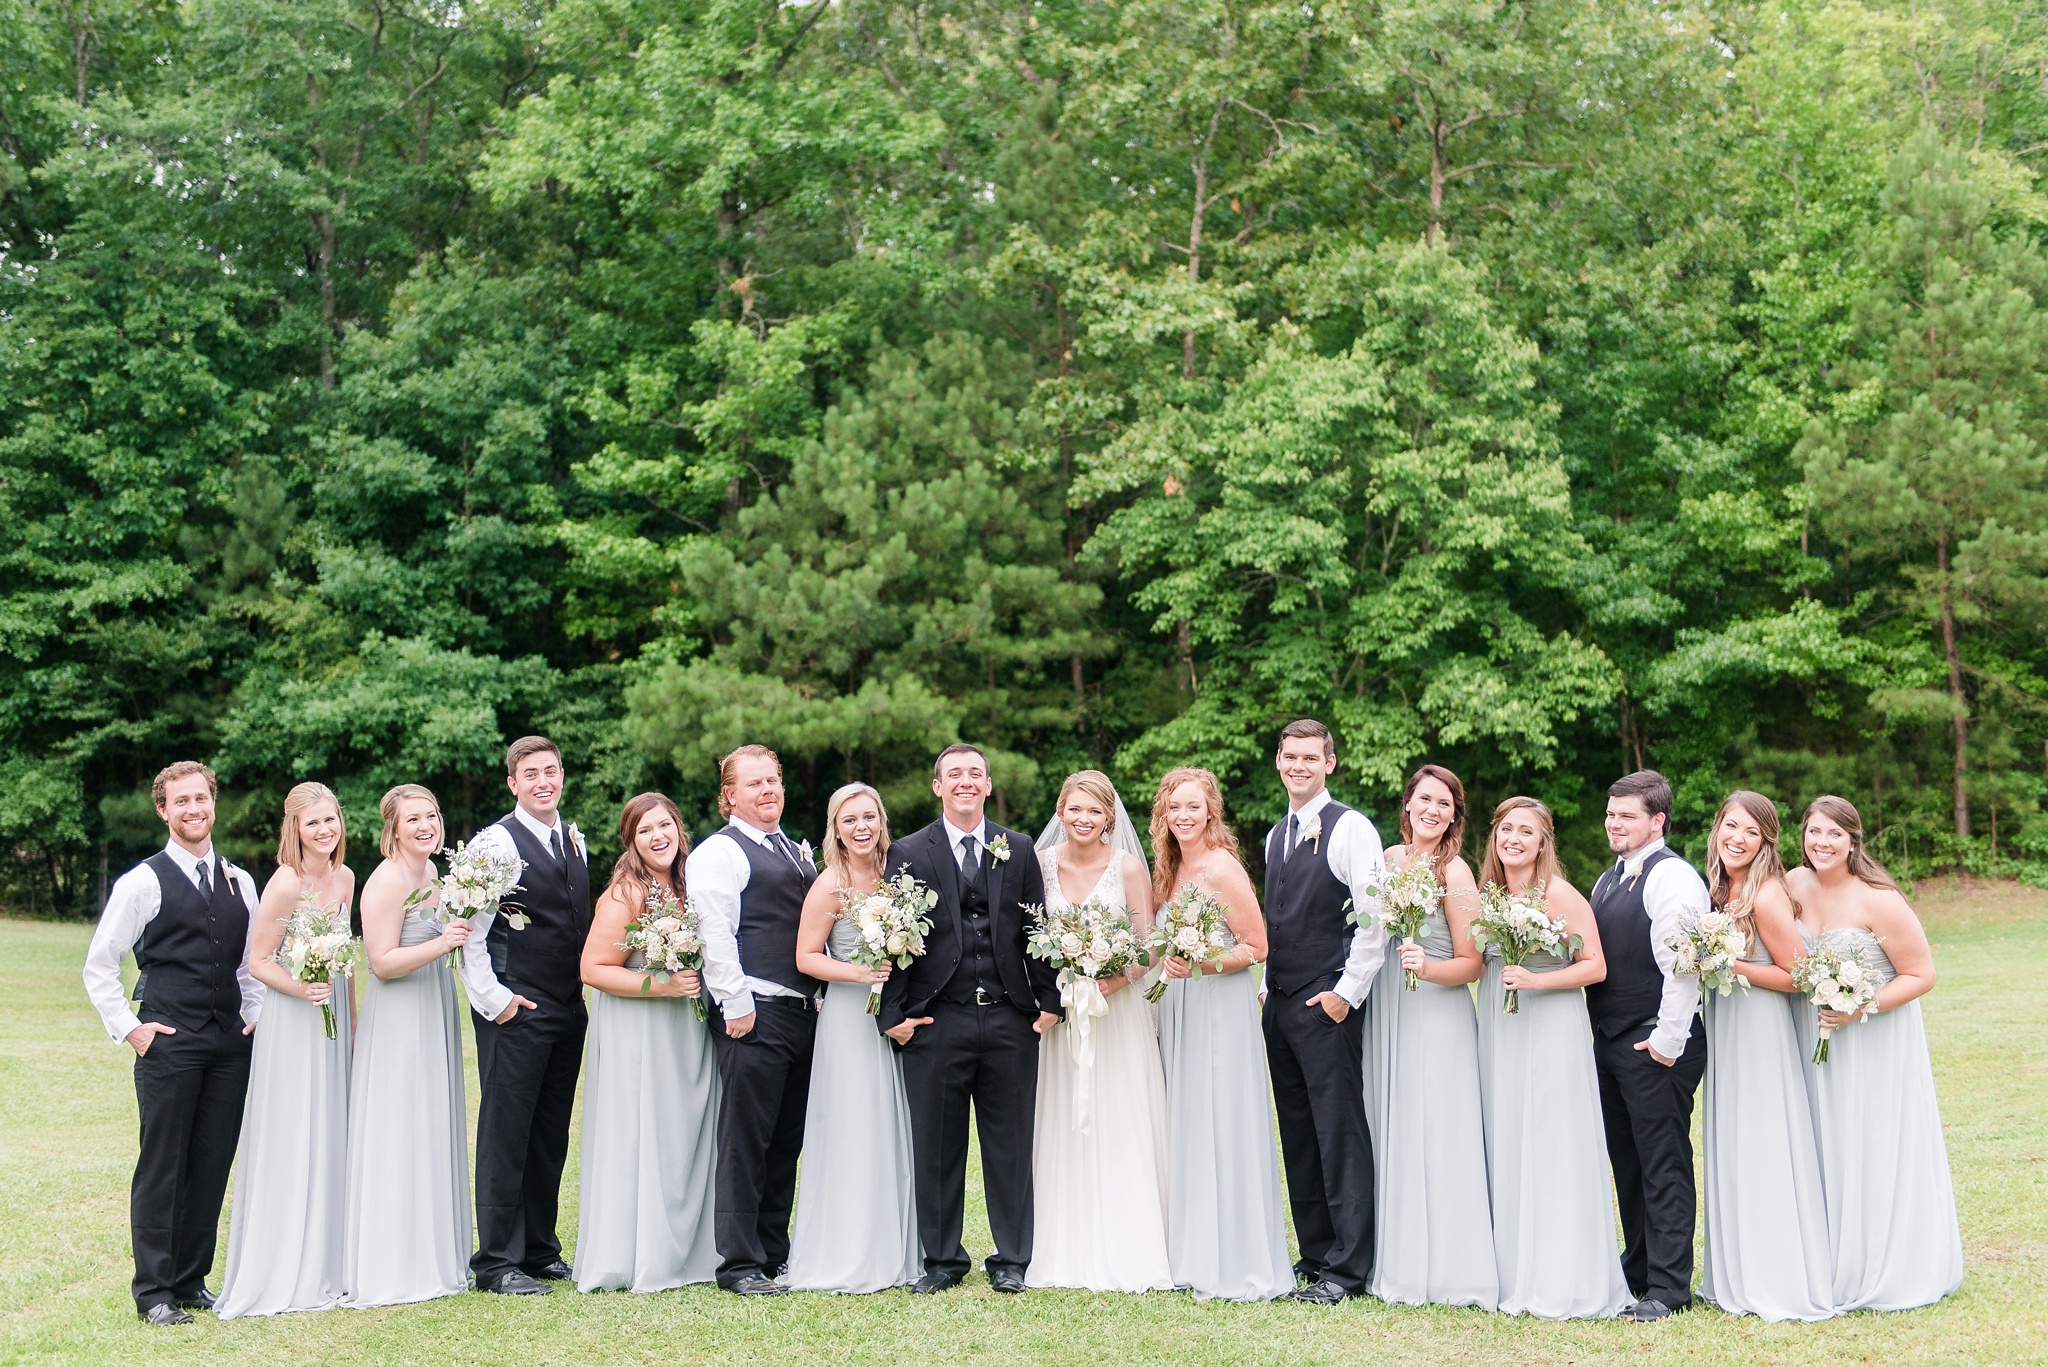 Gray and Black Classic Outdoor Wedding | Birmingham Alabama Wedding Photographers_0036.jpg